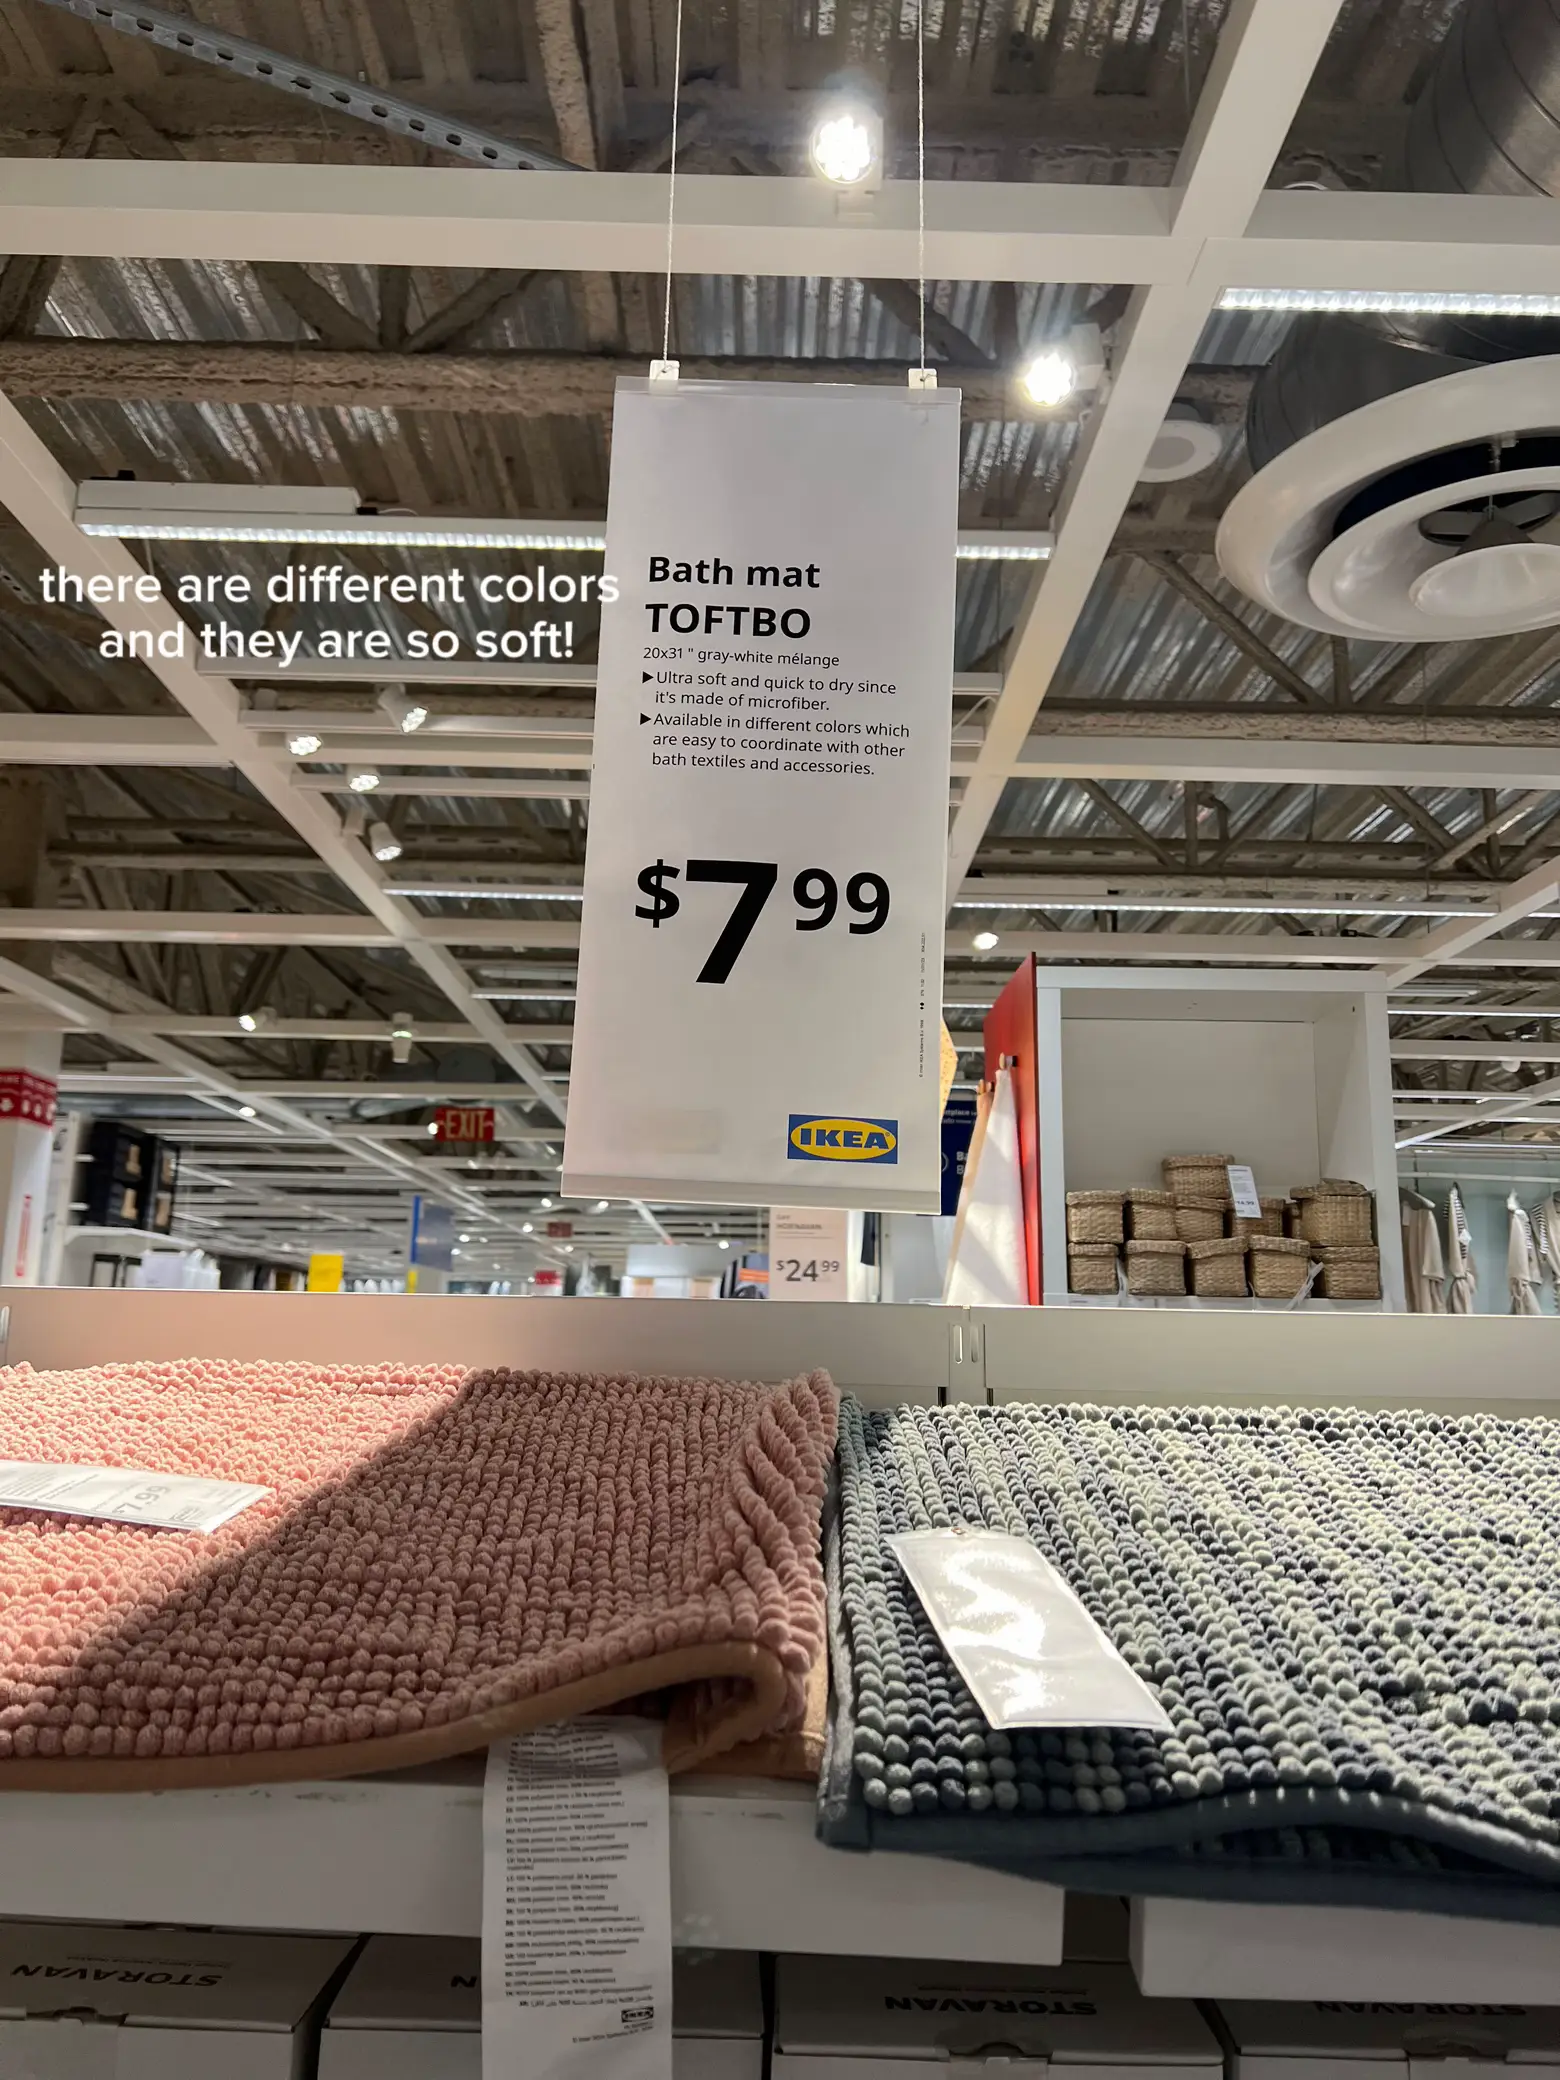 TOFTBO bath mat, gray-white mélange, 20x31 - IKEA